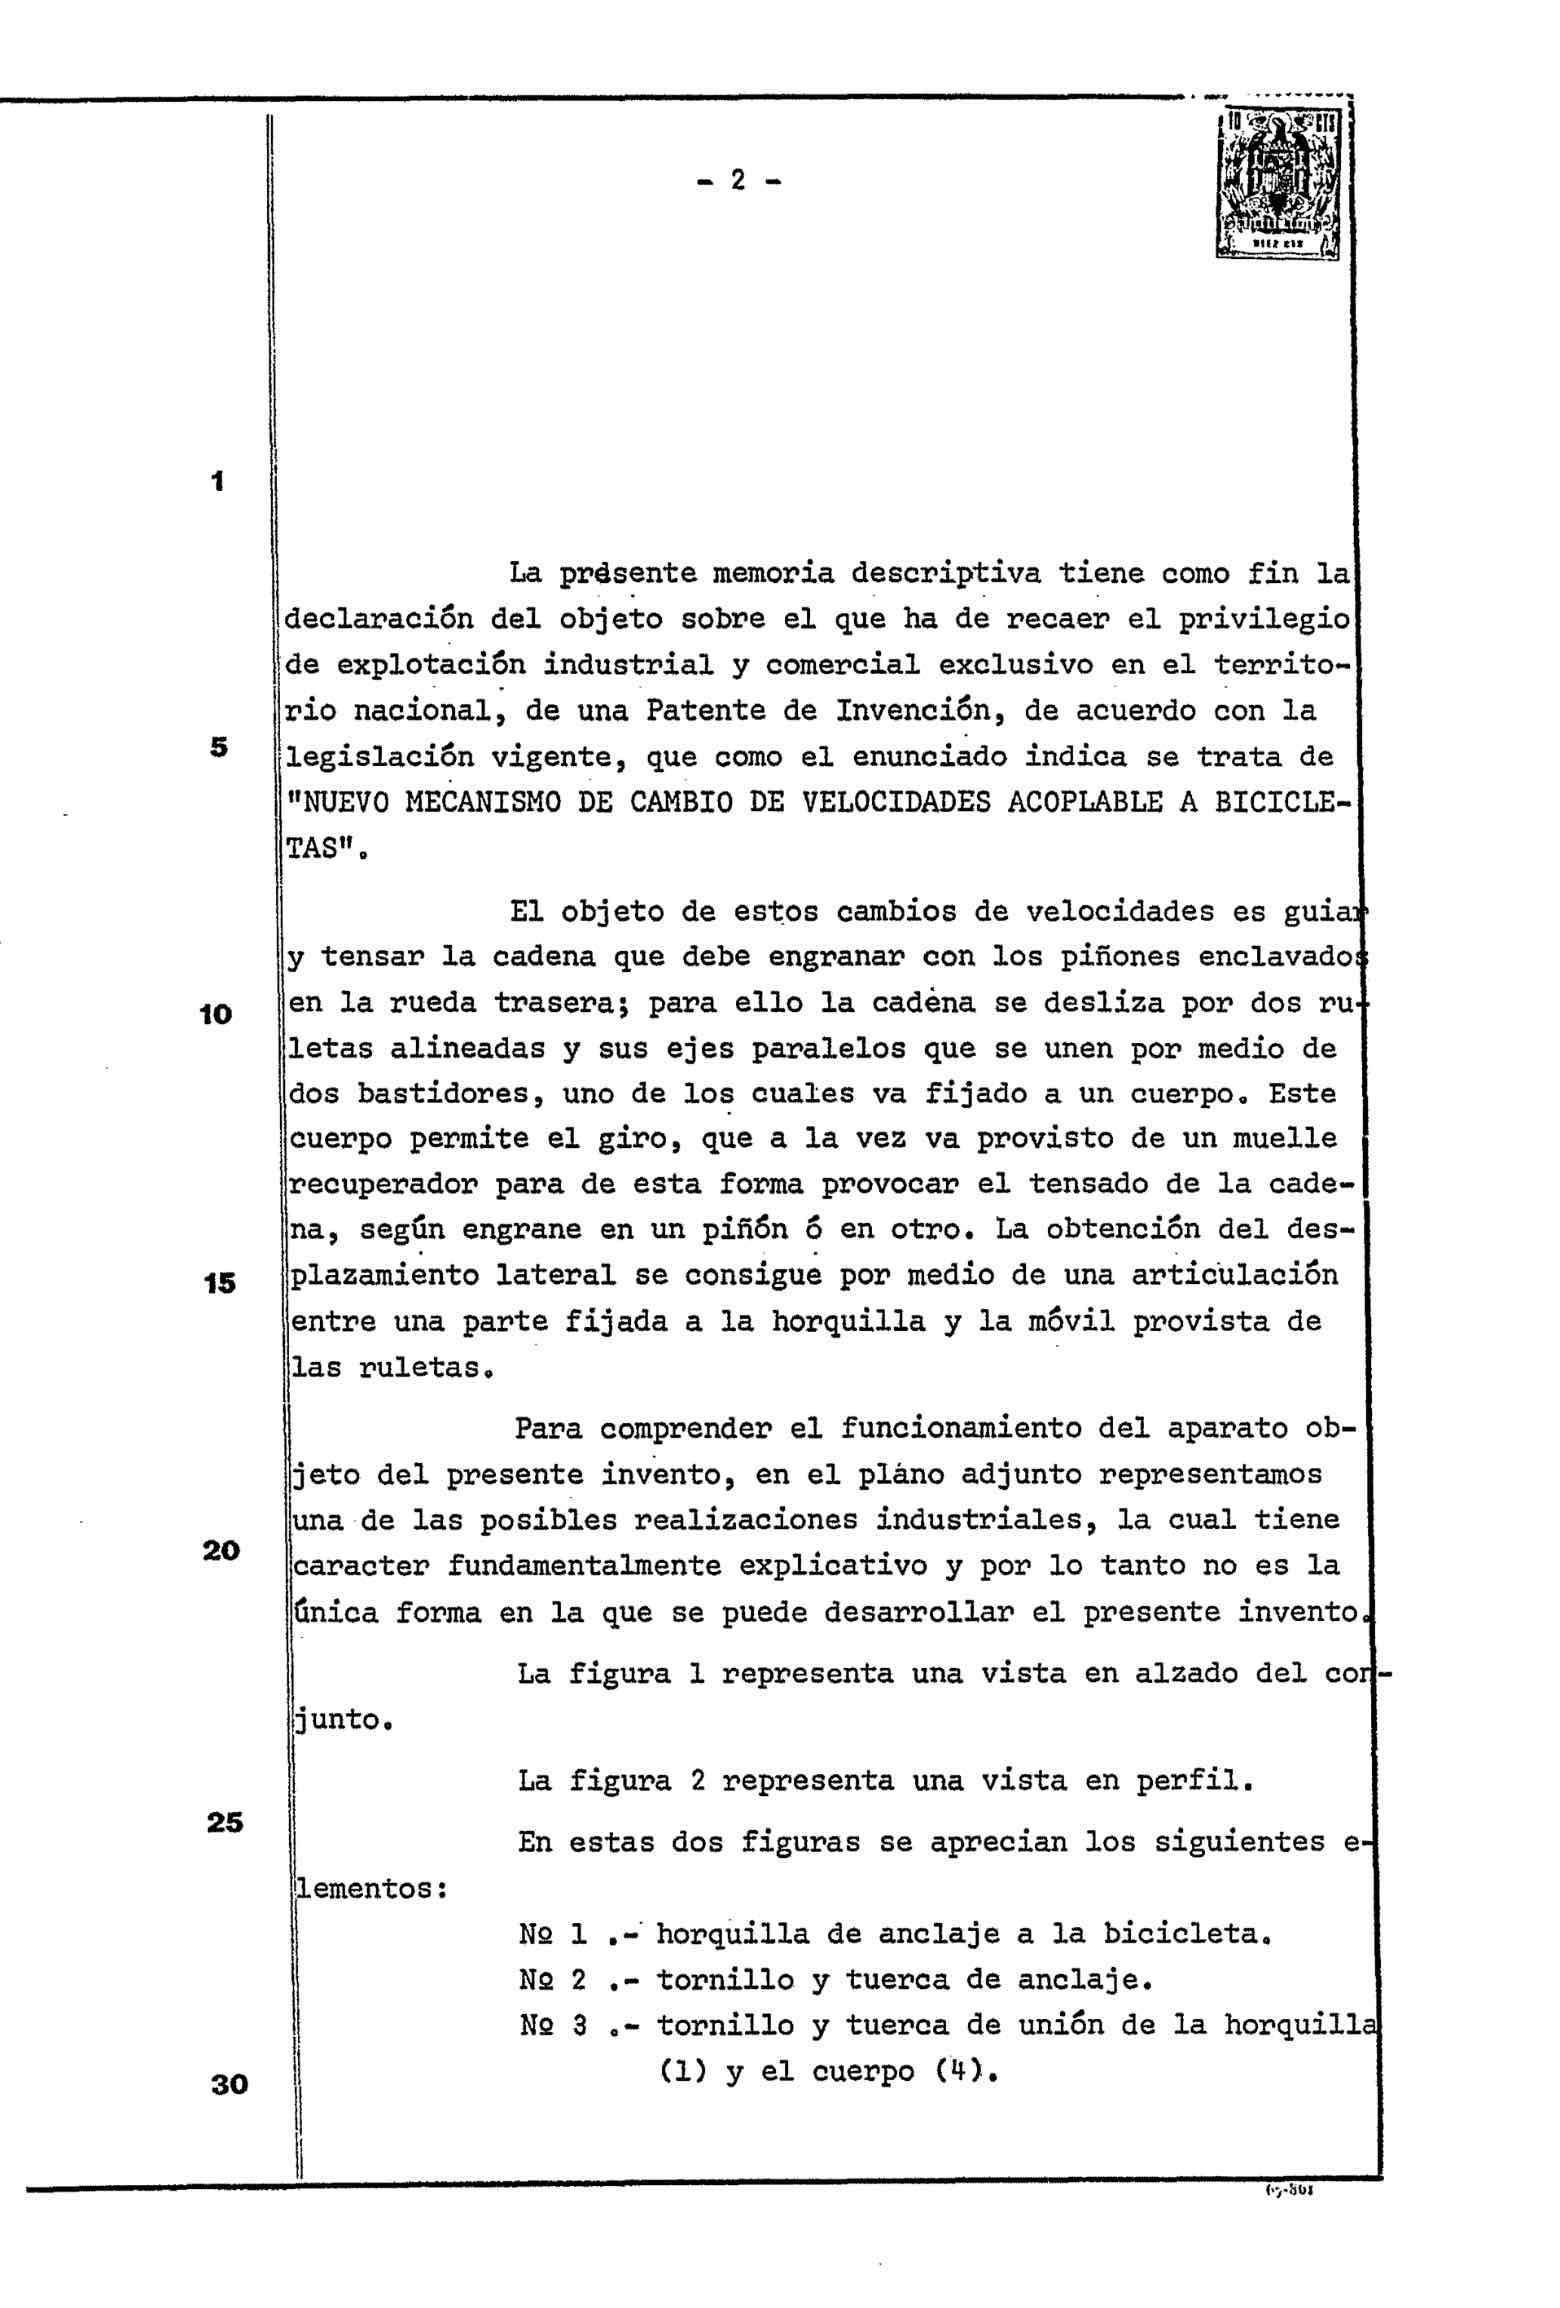 Spanish Patent 347,173 - Triplex scan 2 main image